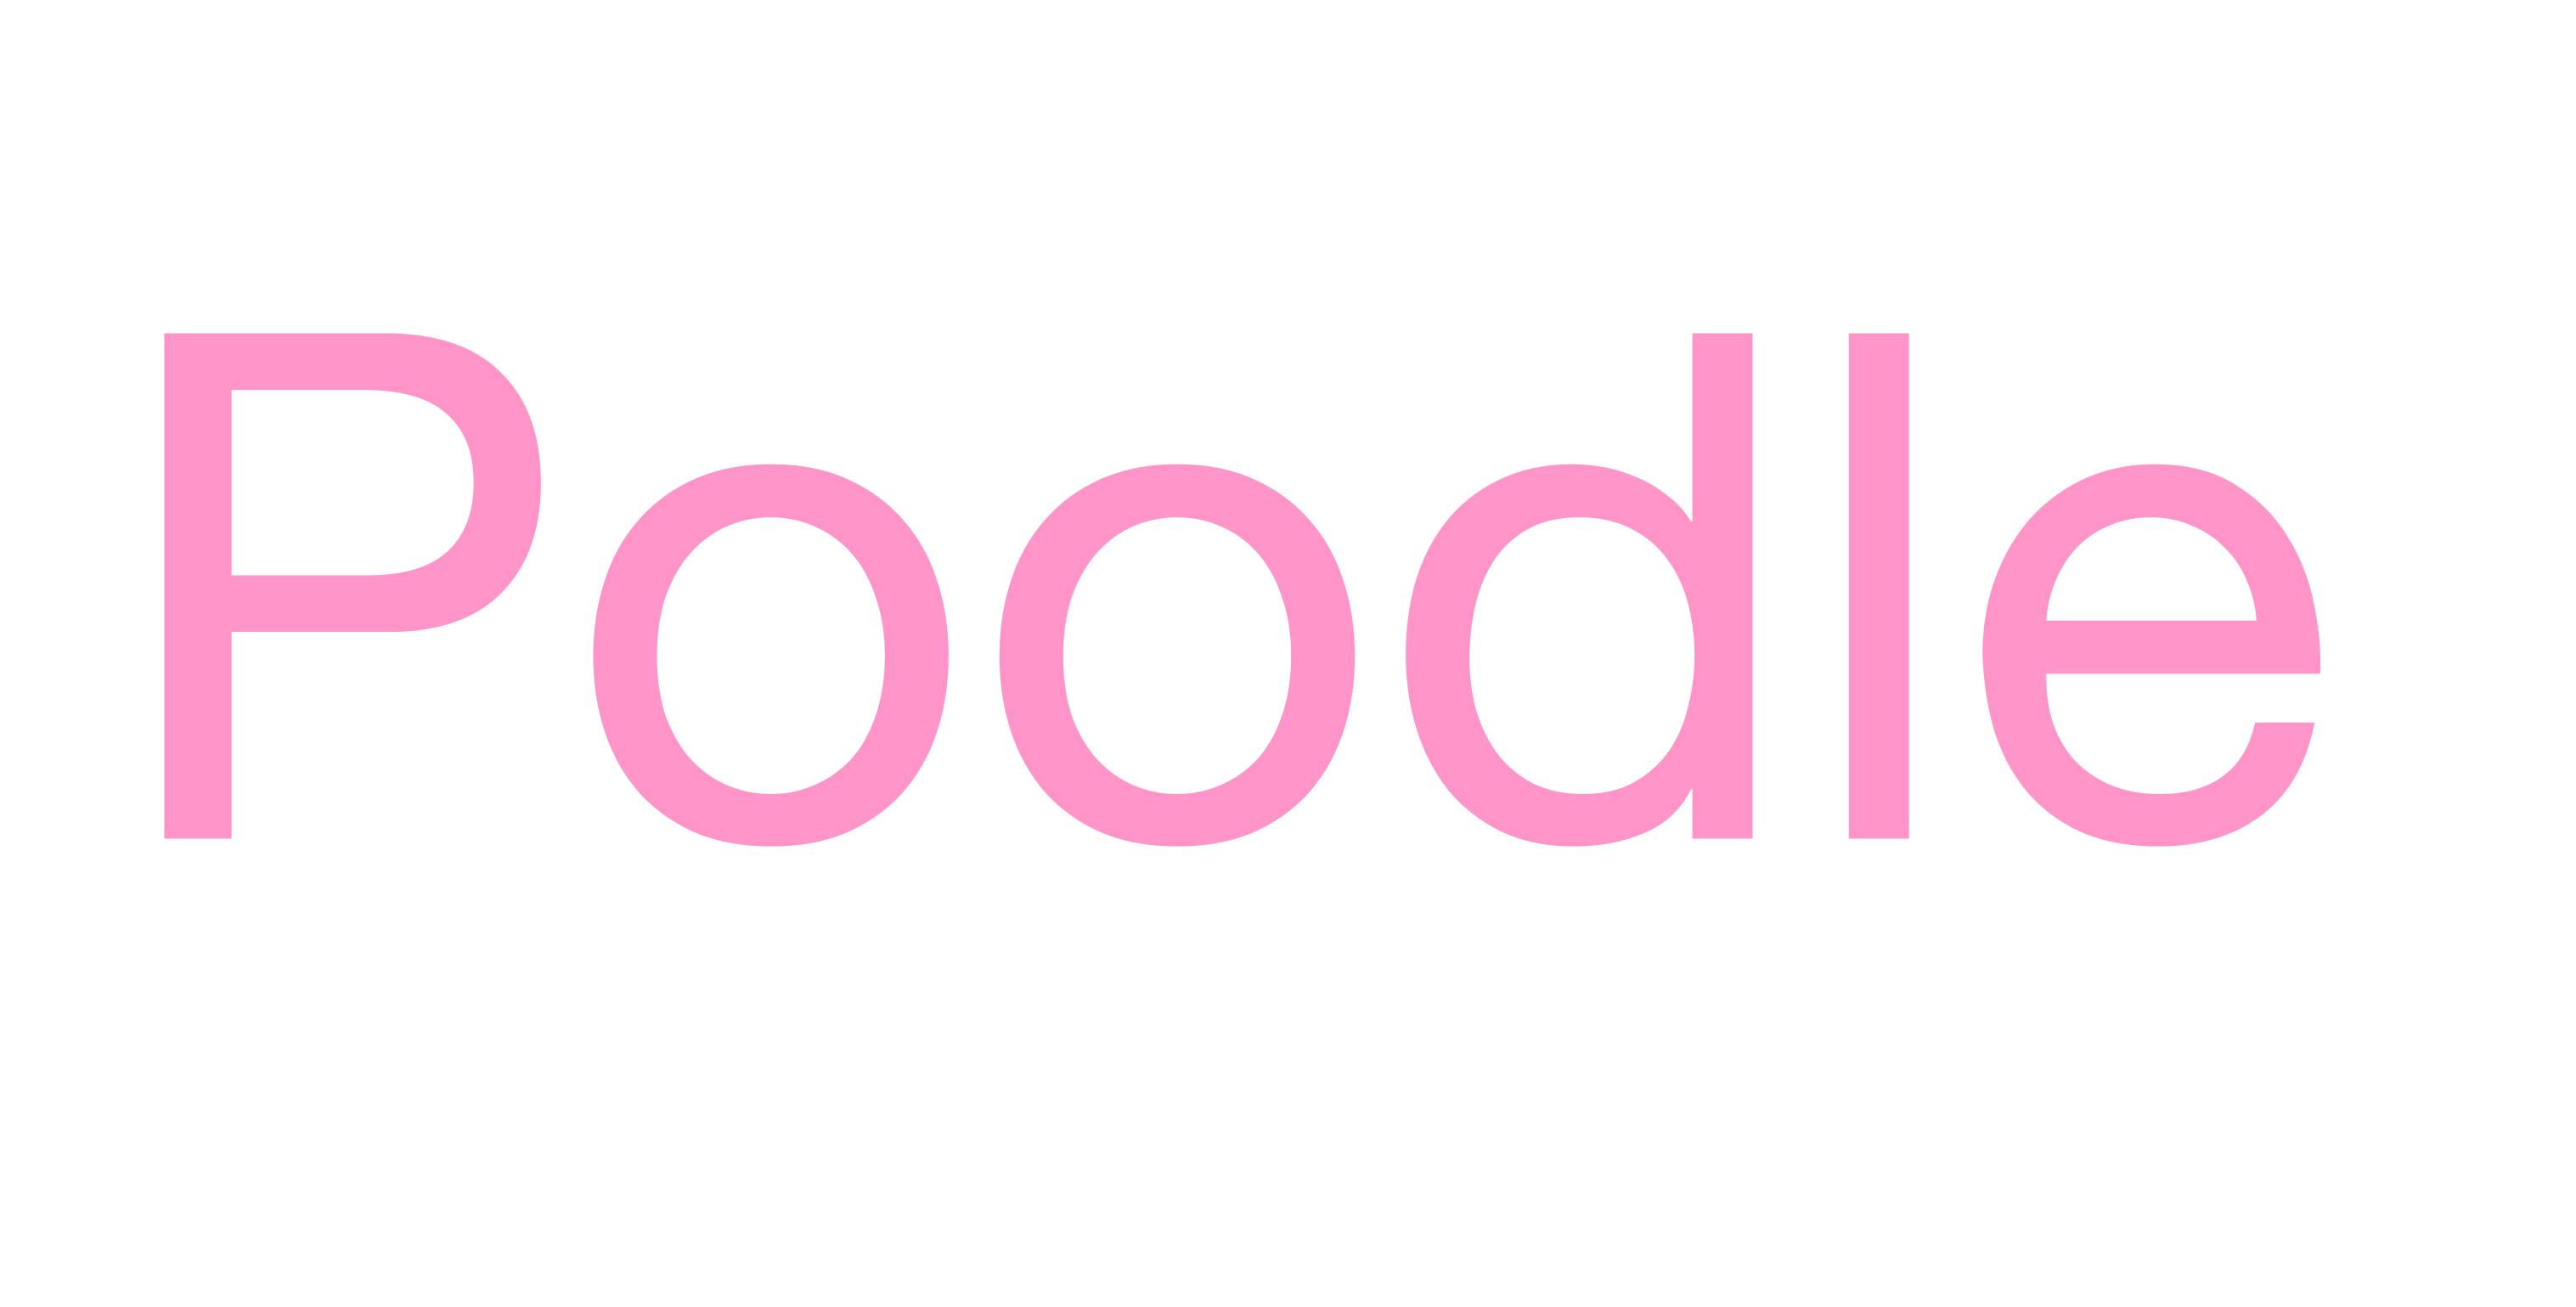 Poodle logo.png